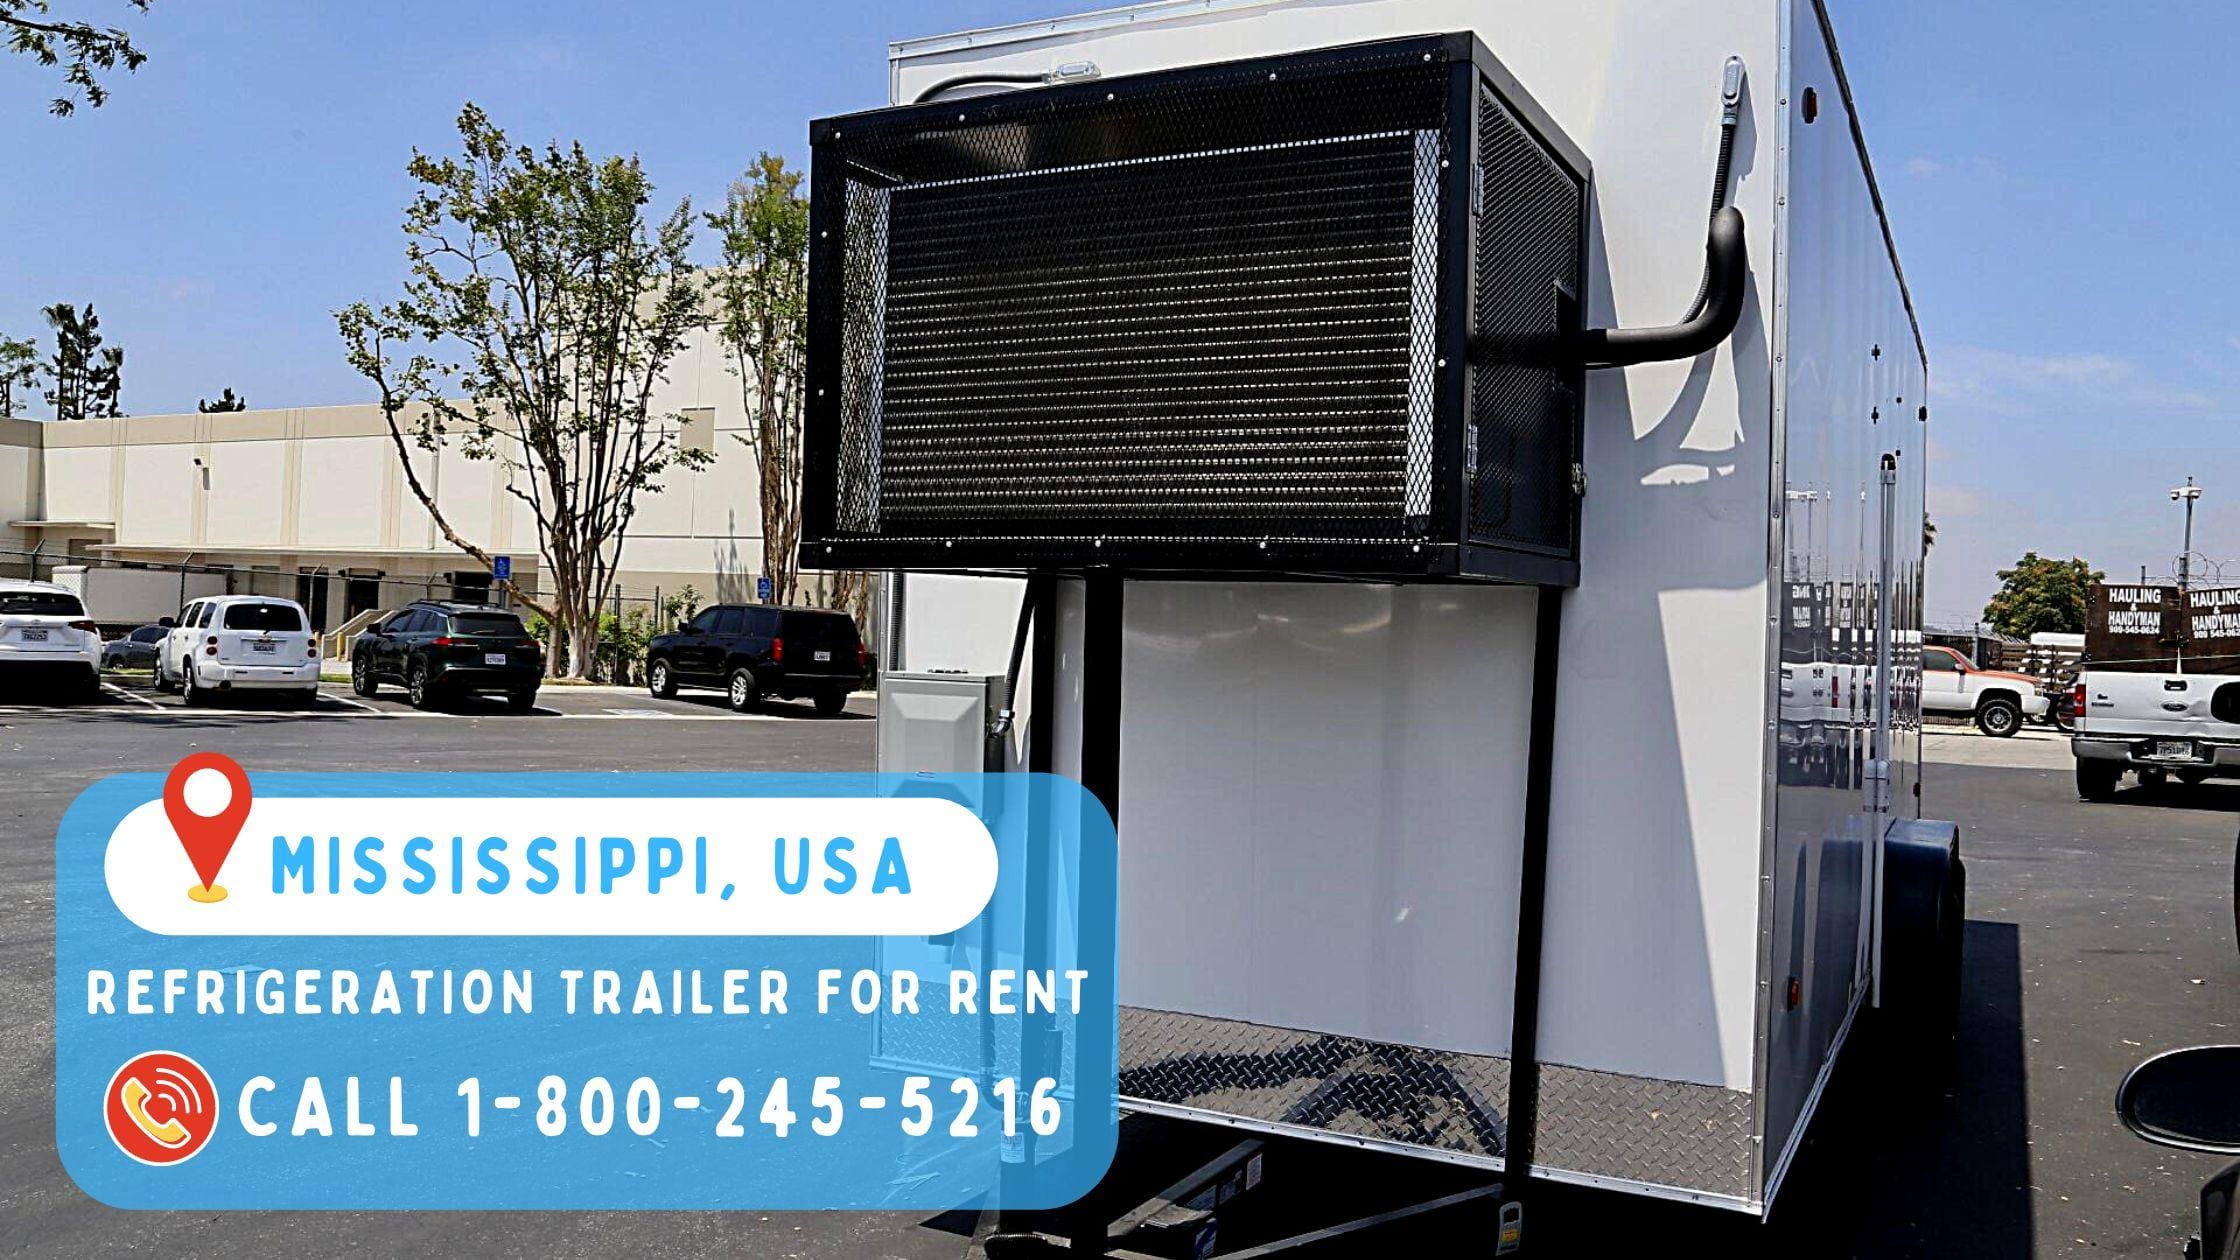 Refrigeration Trailer for Rent in Mississippi